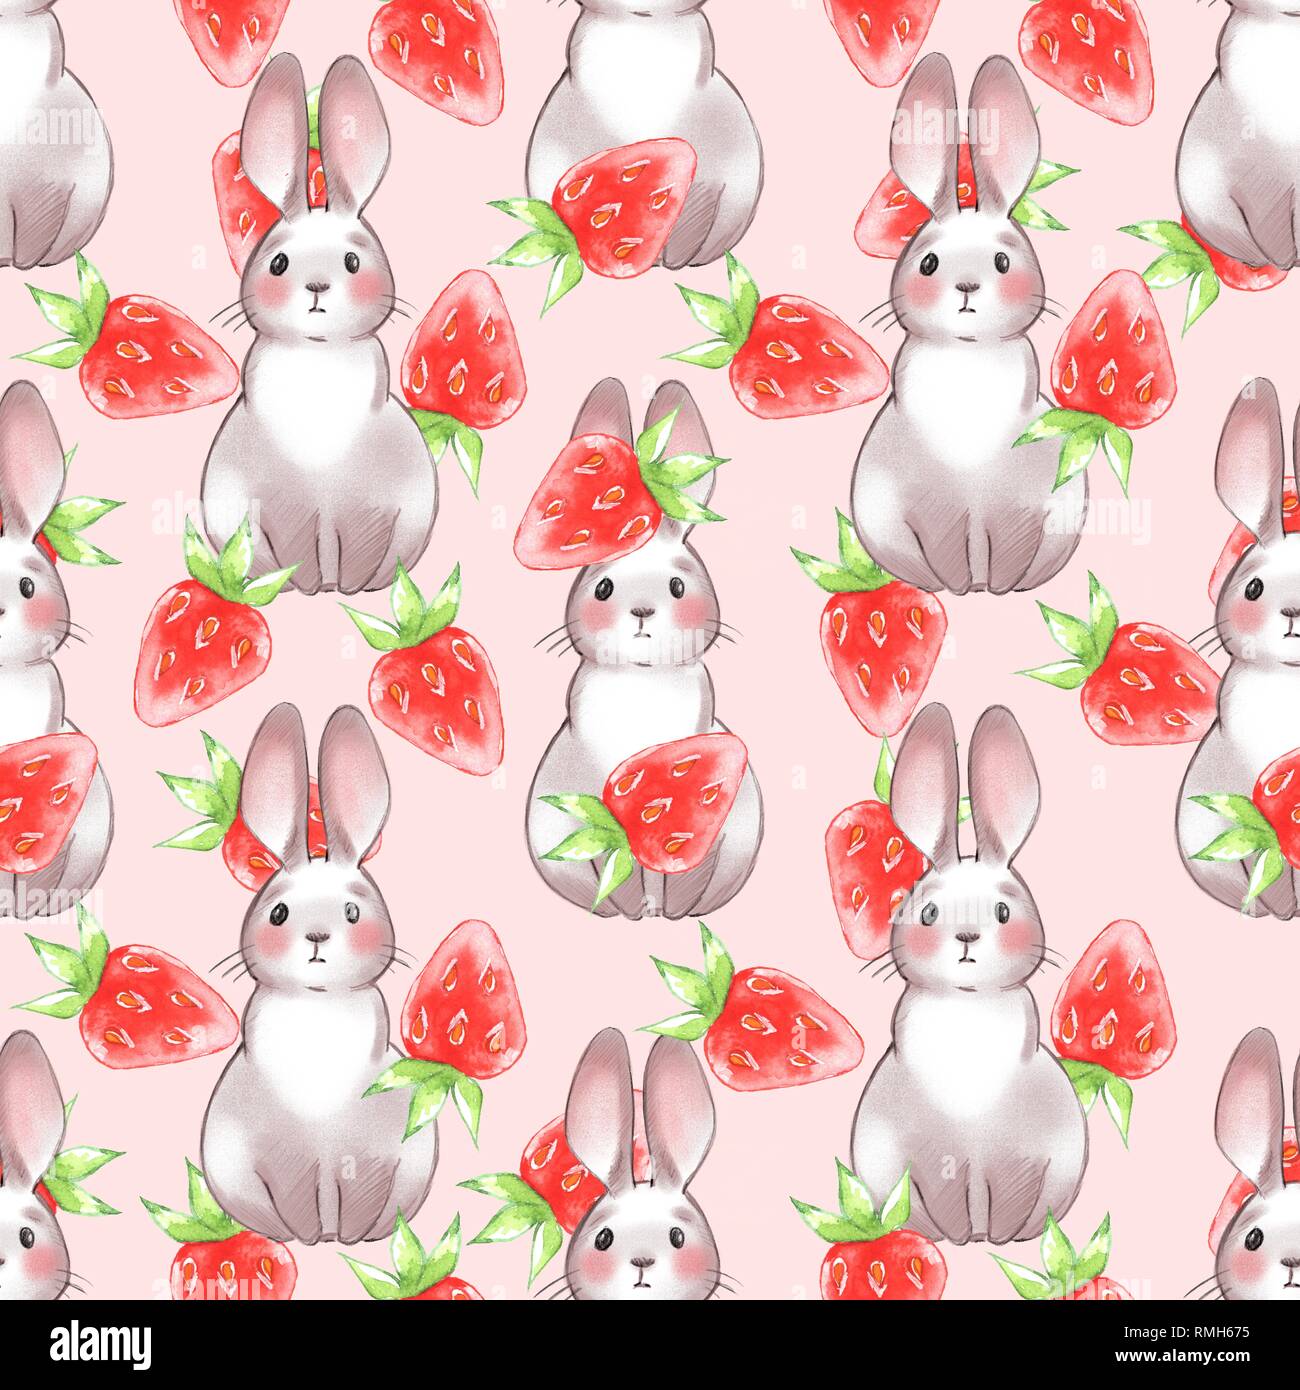 Cute cartoon rabbits and strawberries. Seamless pattern Stock Photo